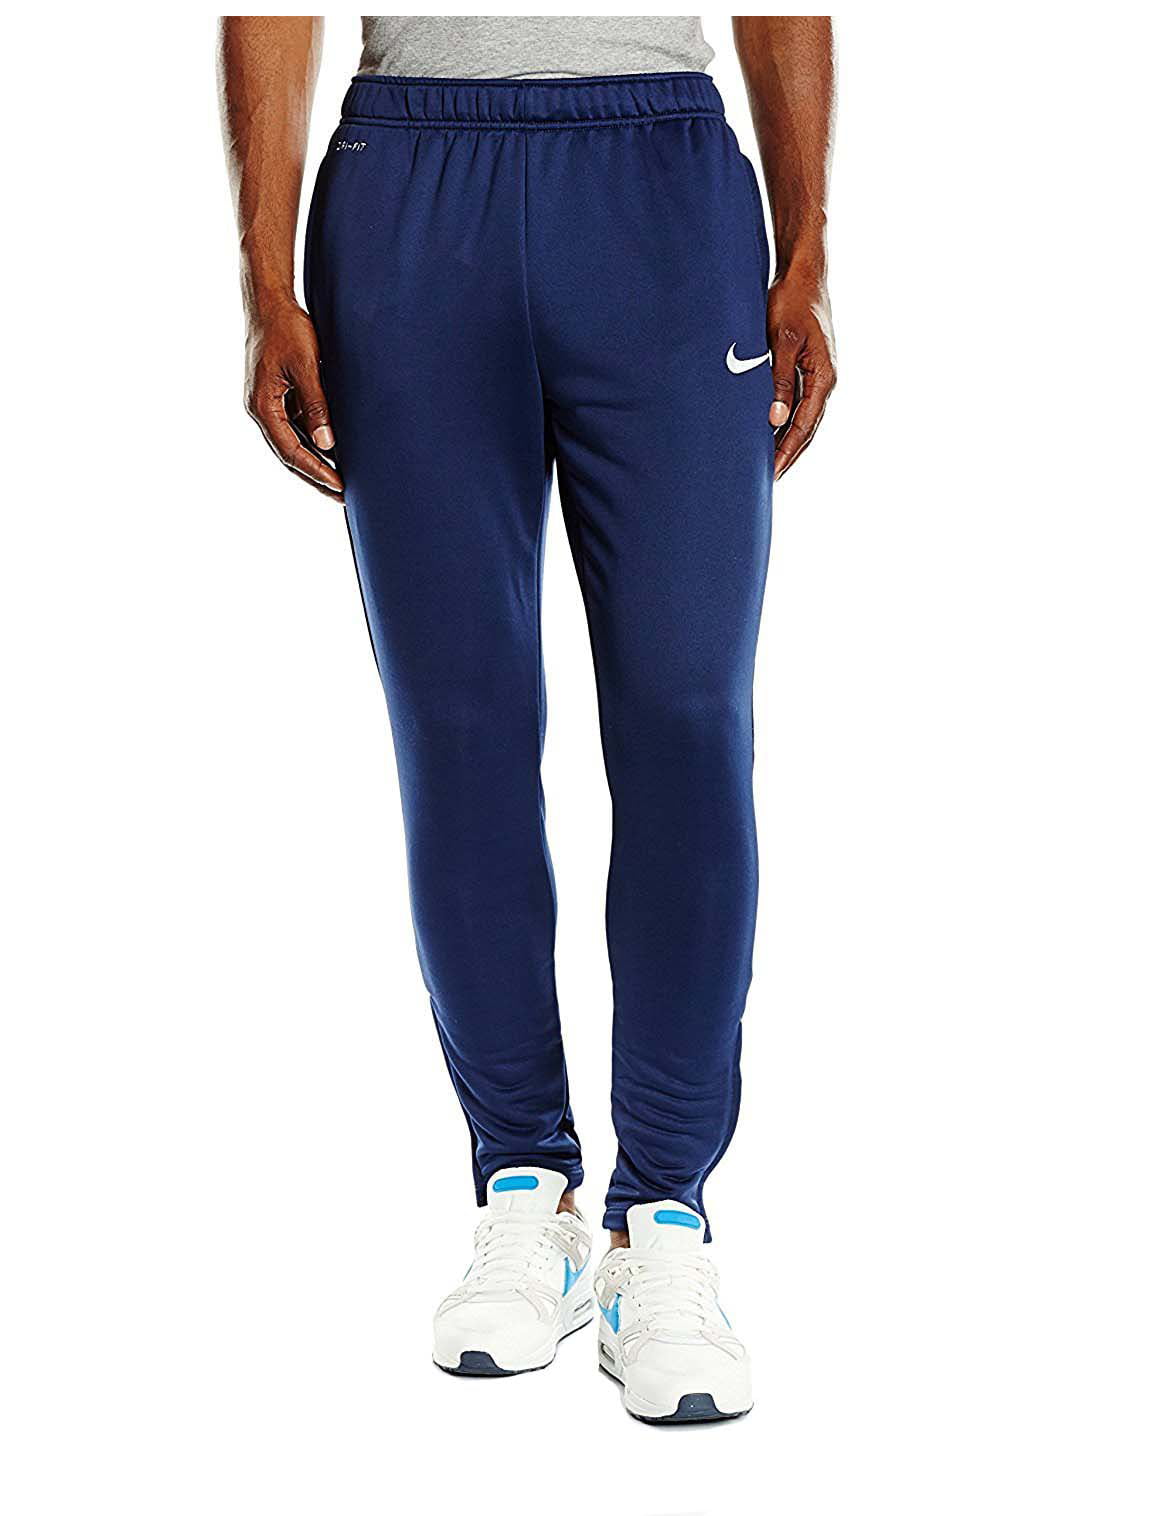 Nike Men's Dri-Fit Academy Tech Soccer Pants - Walmart.com - Walmart.com